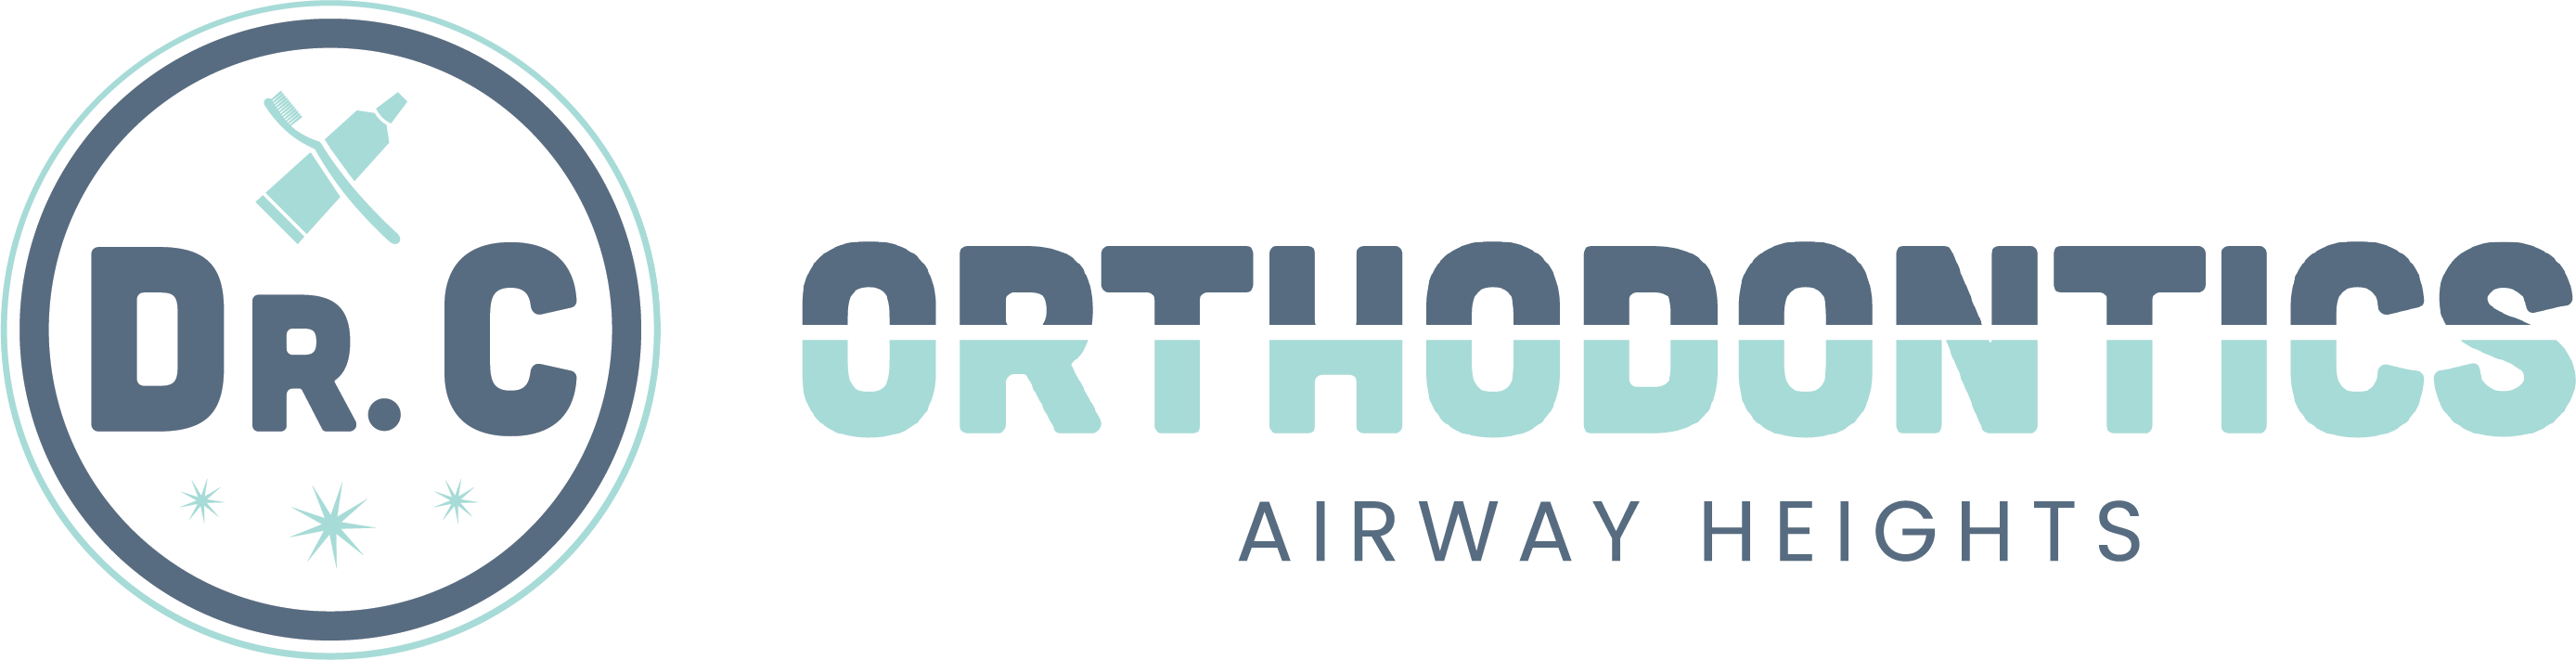 dr-c-orthodontics-airway-heights-wa-logo